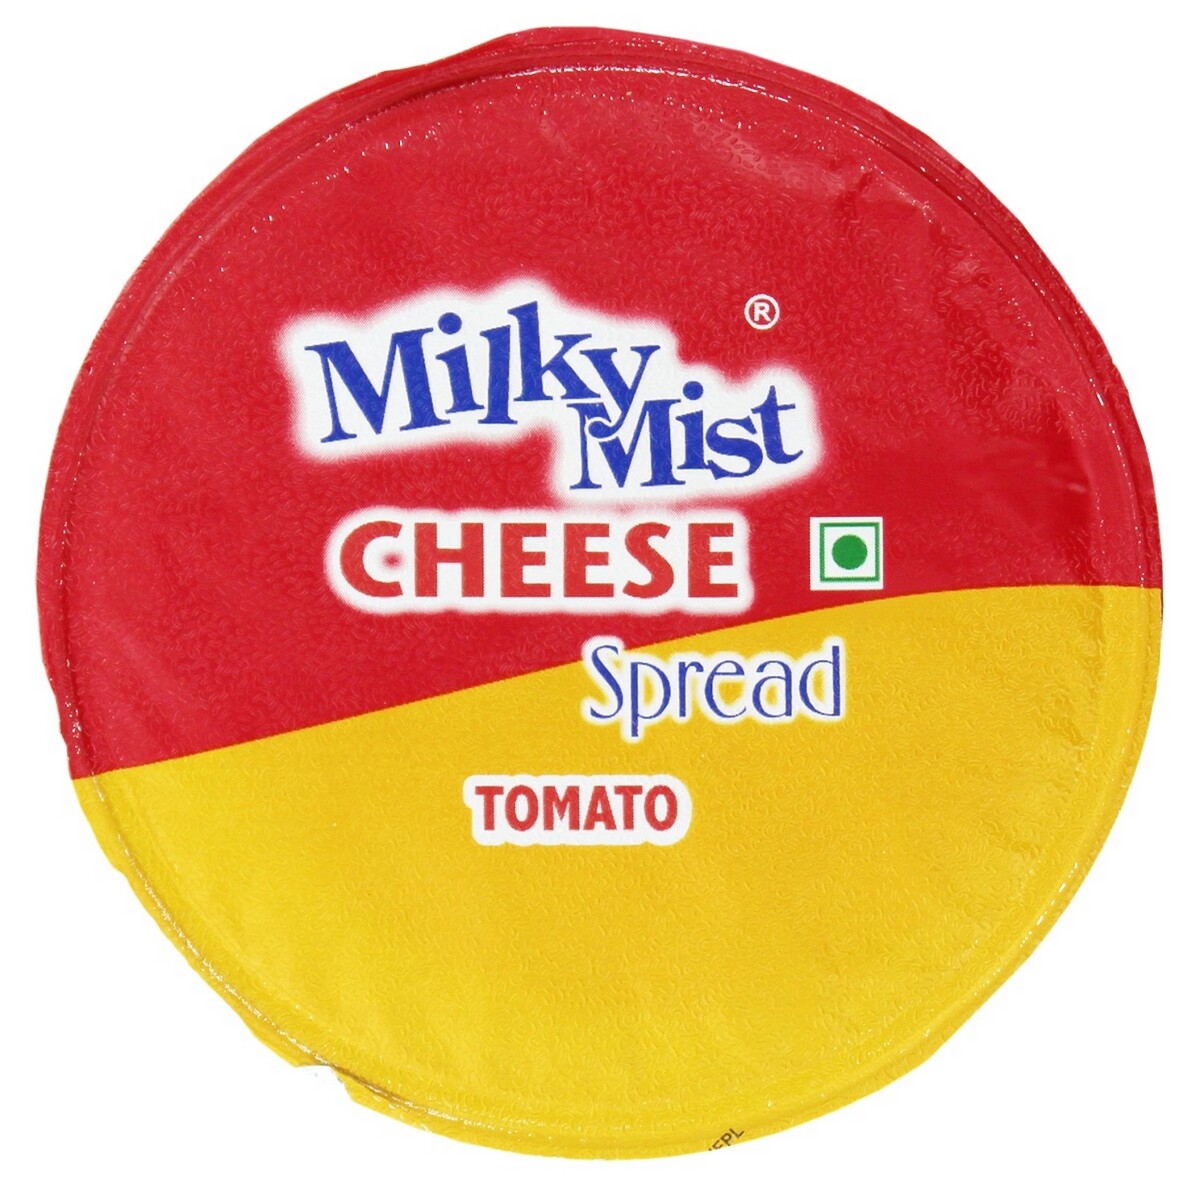 Milky Mist Cheese Spread Tomato 200g